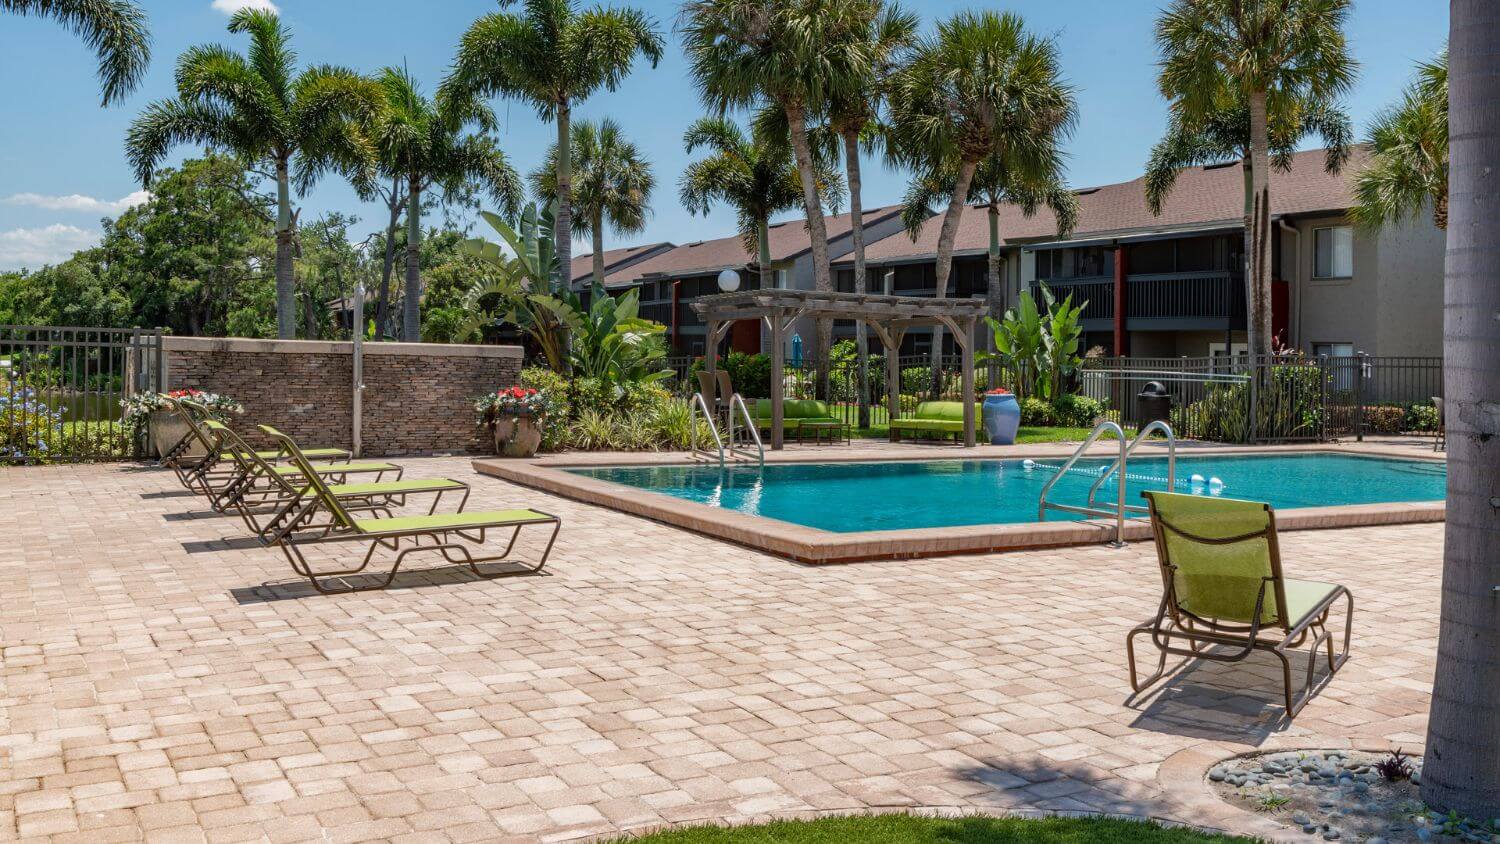 Resort-style swimming pool with veranda